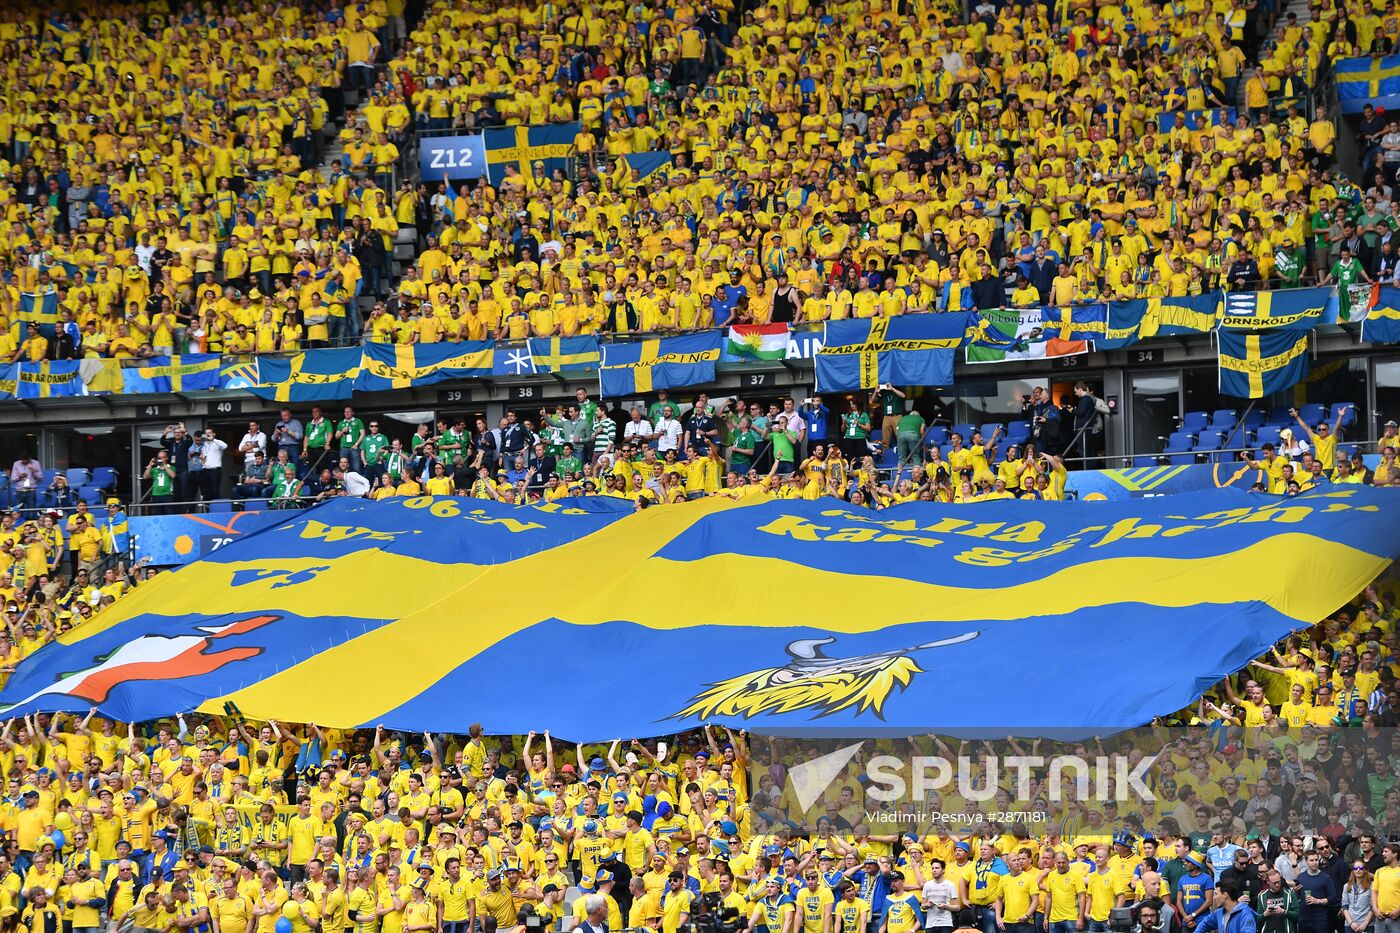 UEFA Euro 2016. Republic of Ireland vs. Sweden